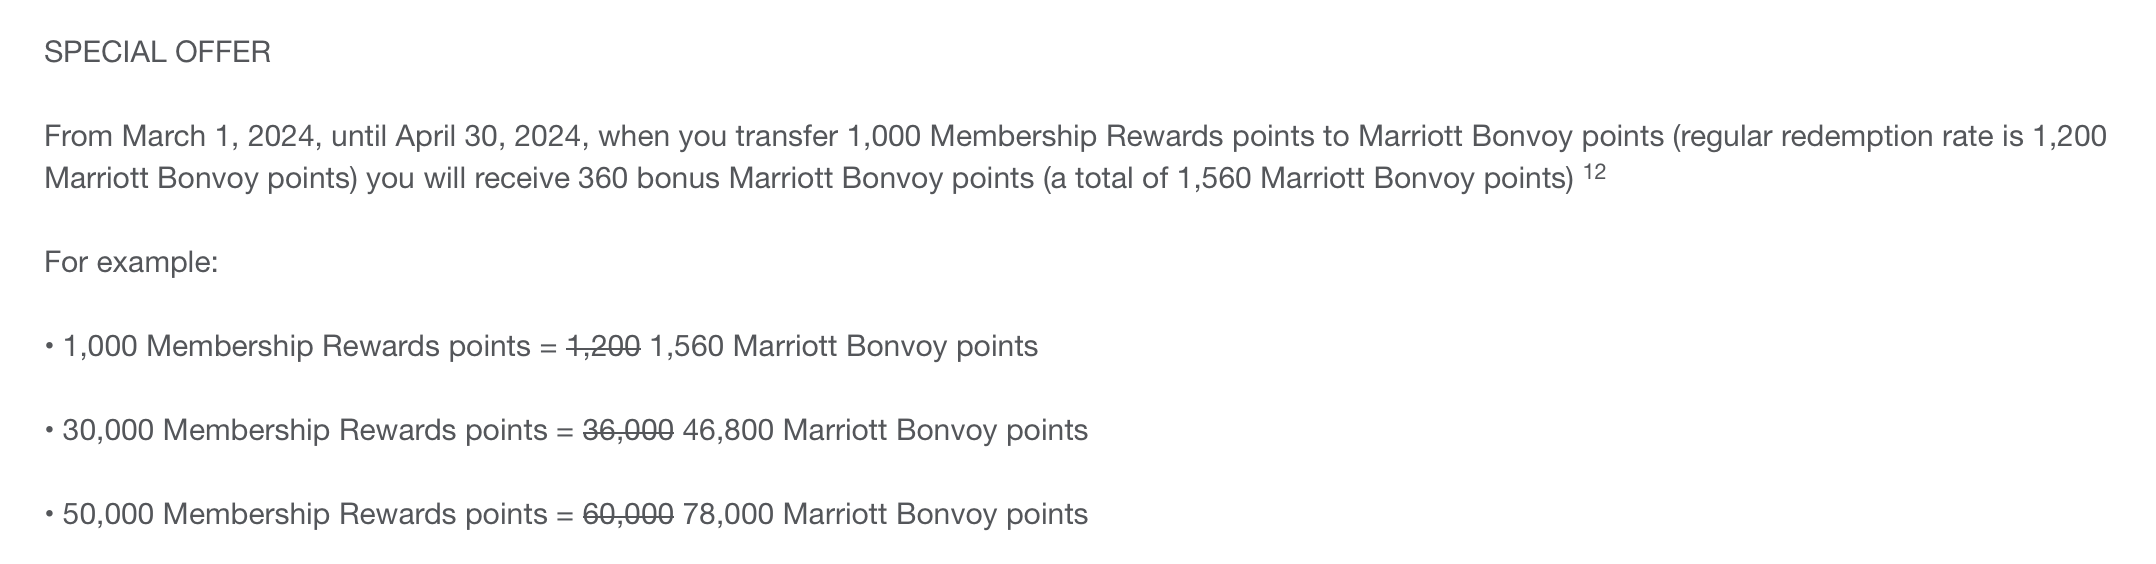 Amex Transfer Bonus - Marriott Bonvoy